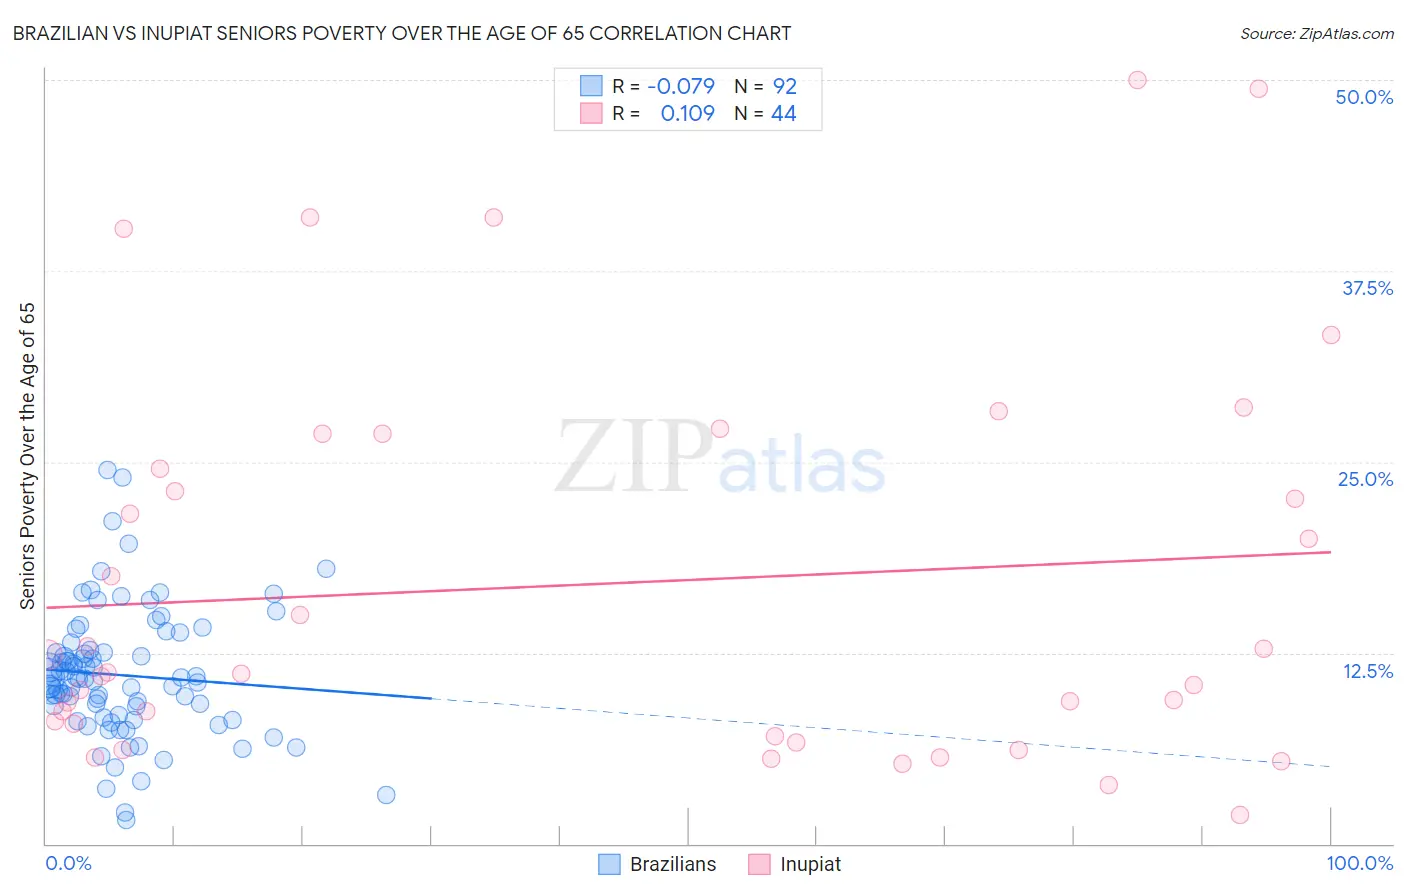 Brazilian vs Inupiat Seniors Poverty Over the Age of 65